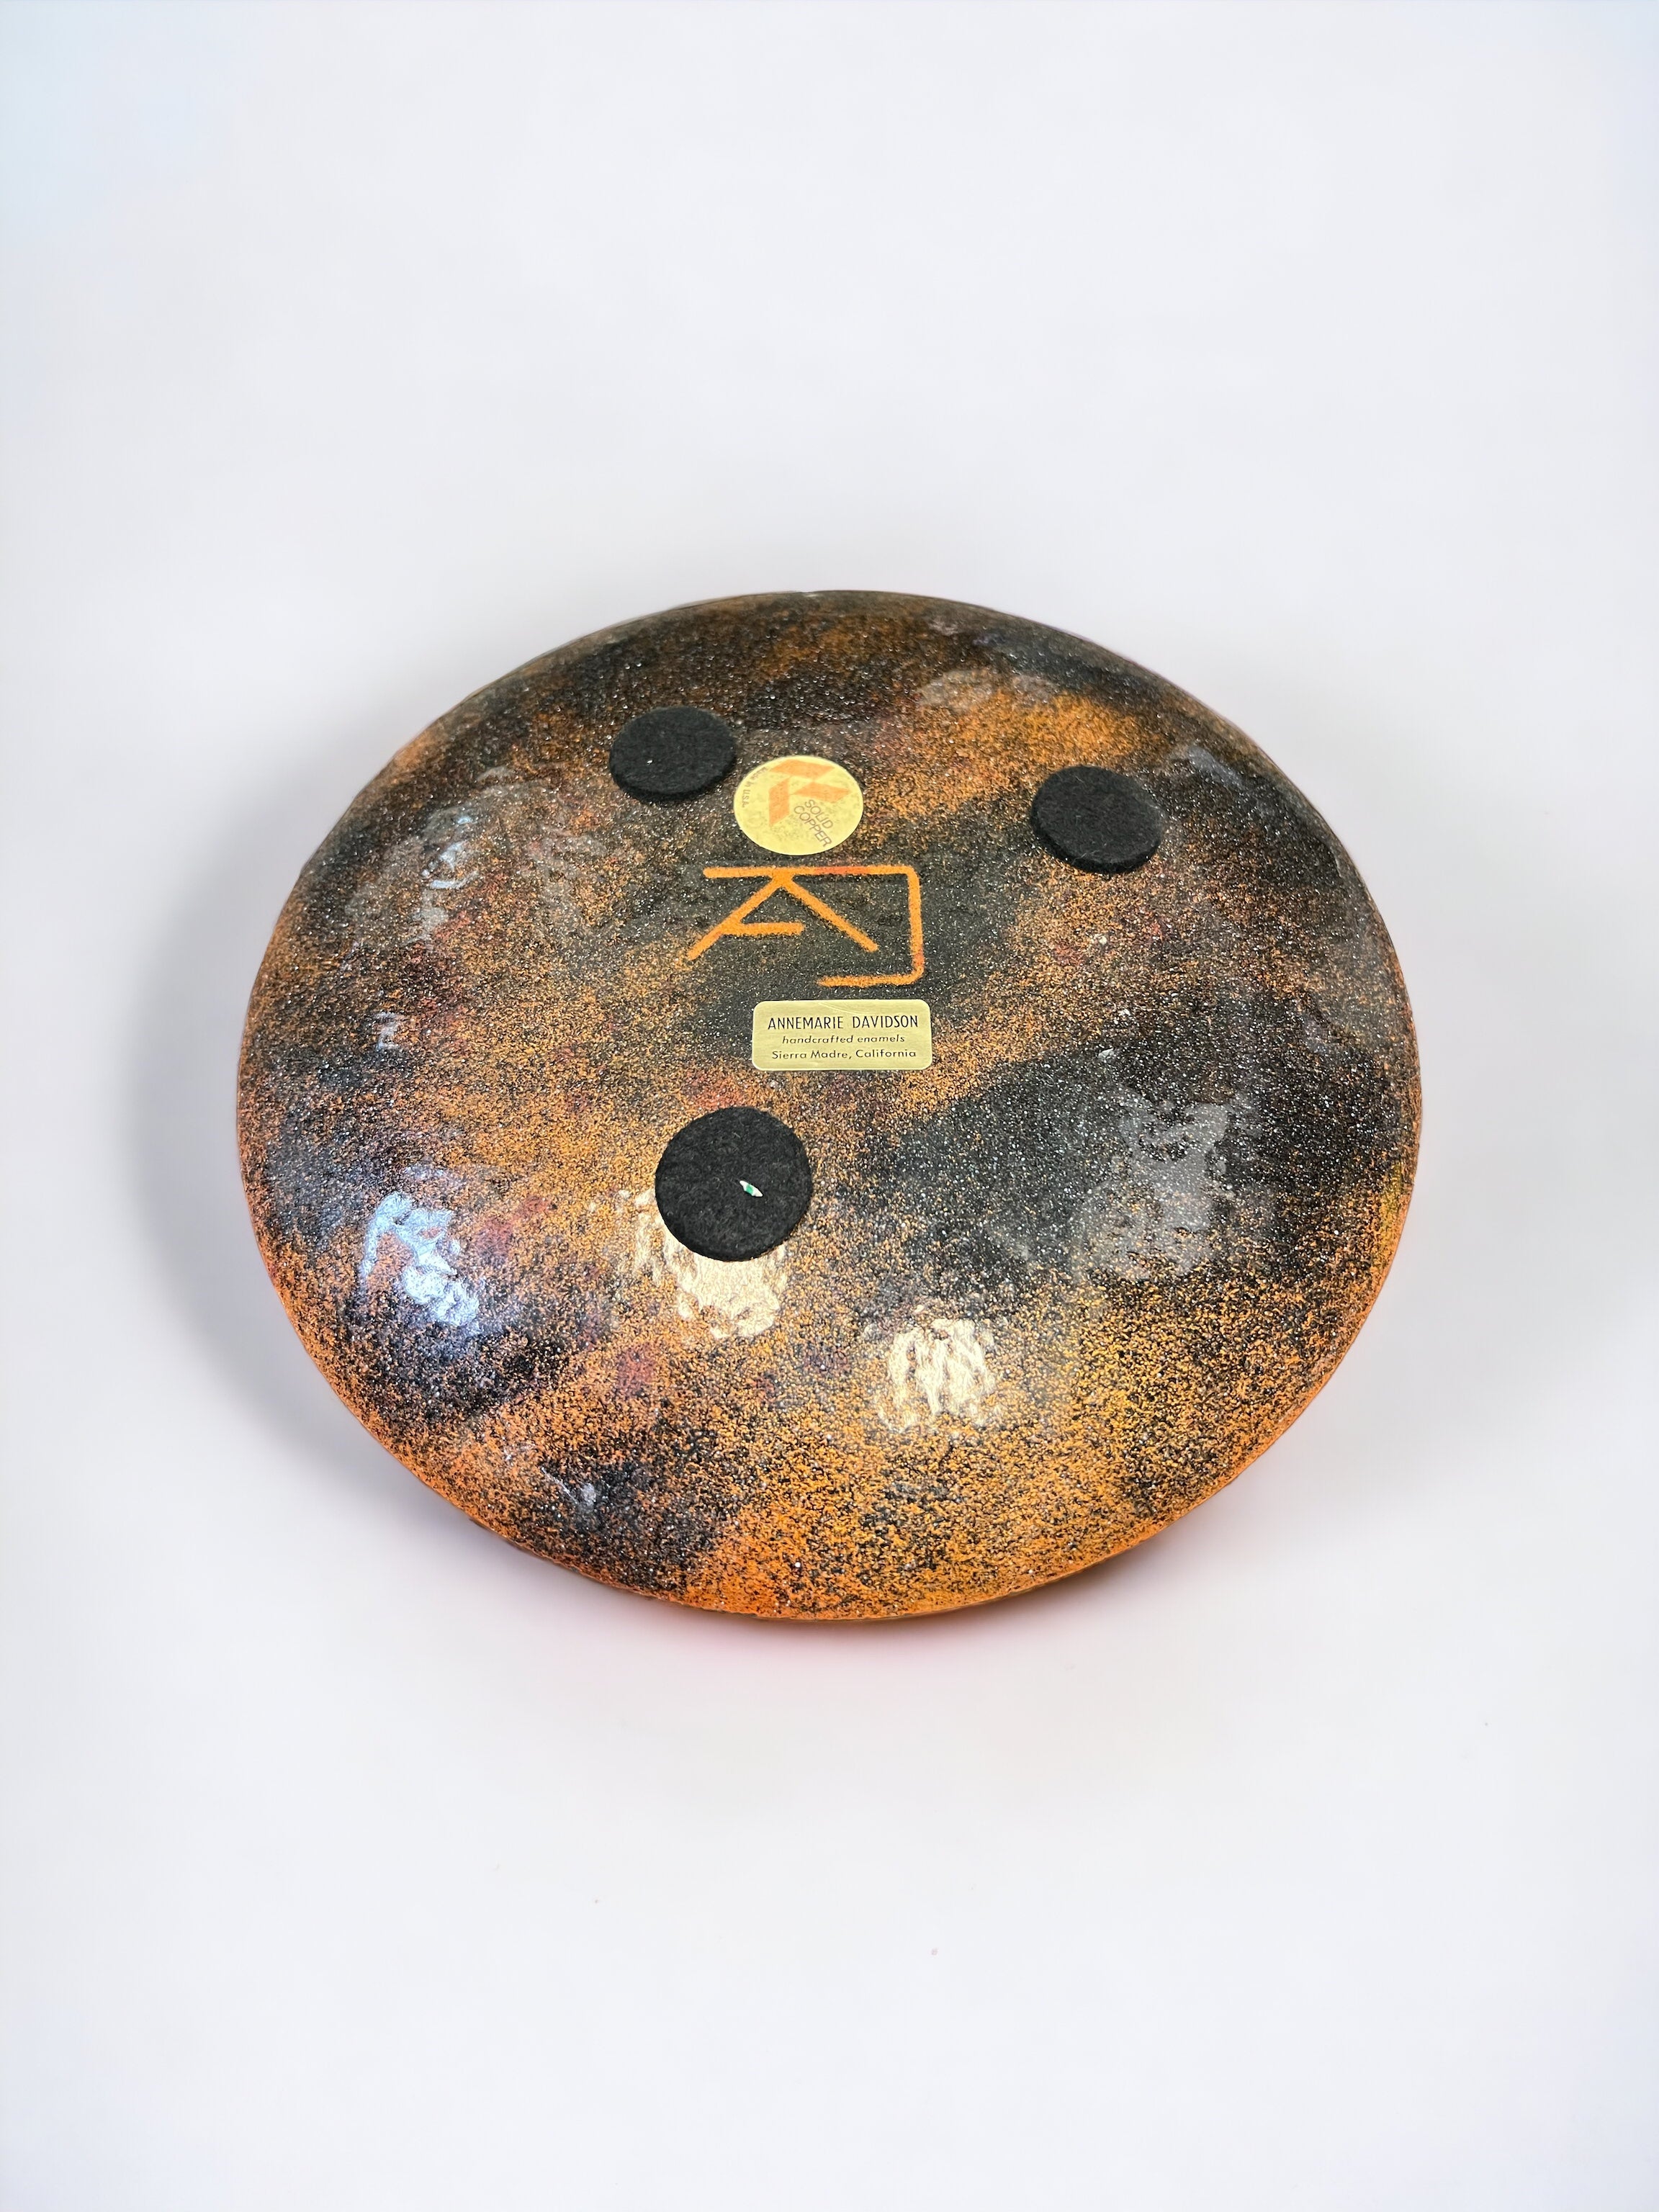 “Annemarie Davidson” Copper Large Floral Enamel Plate